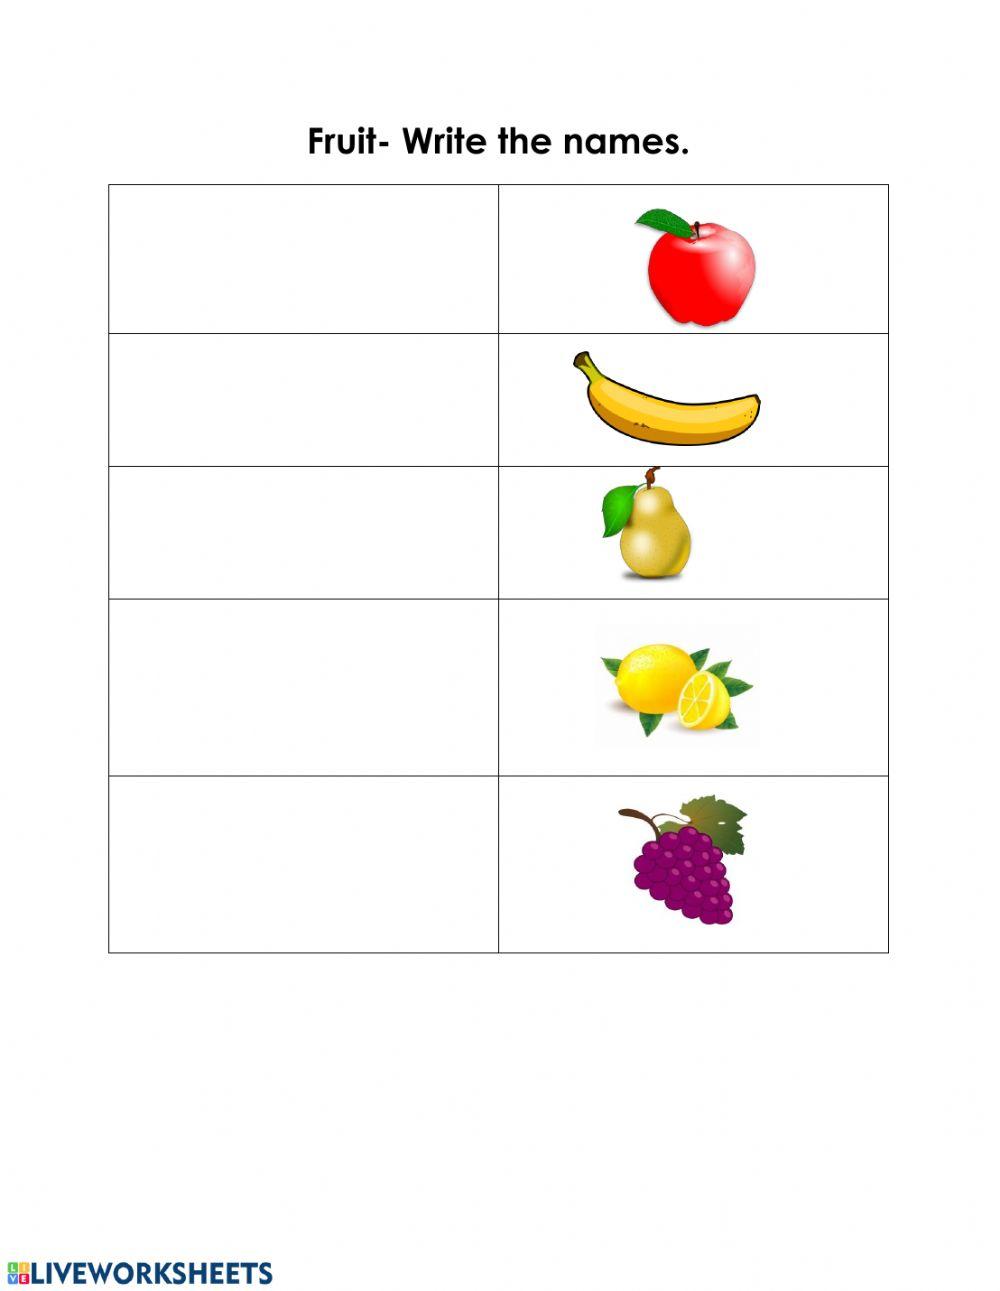 Fruit- Write the names